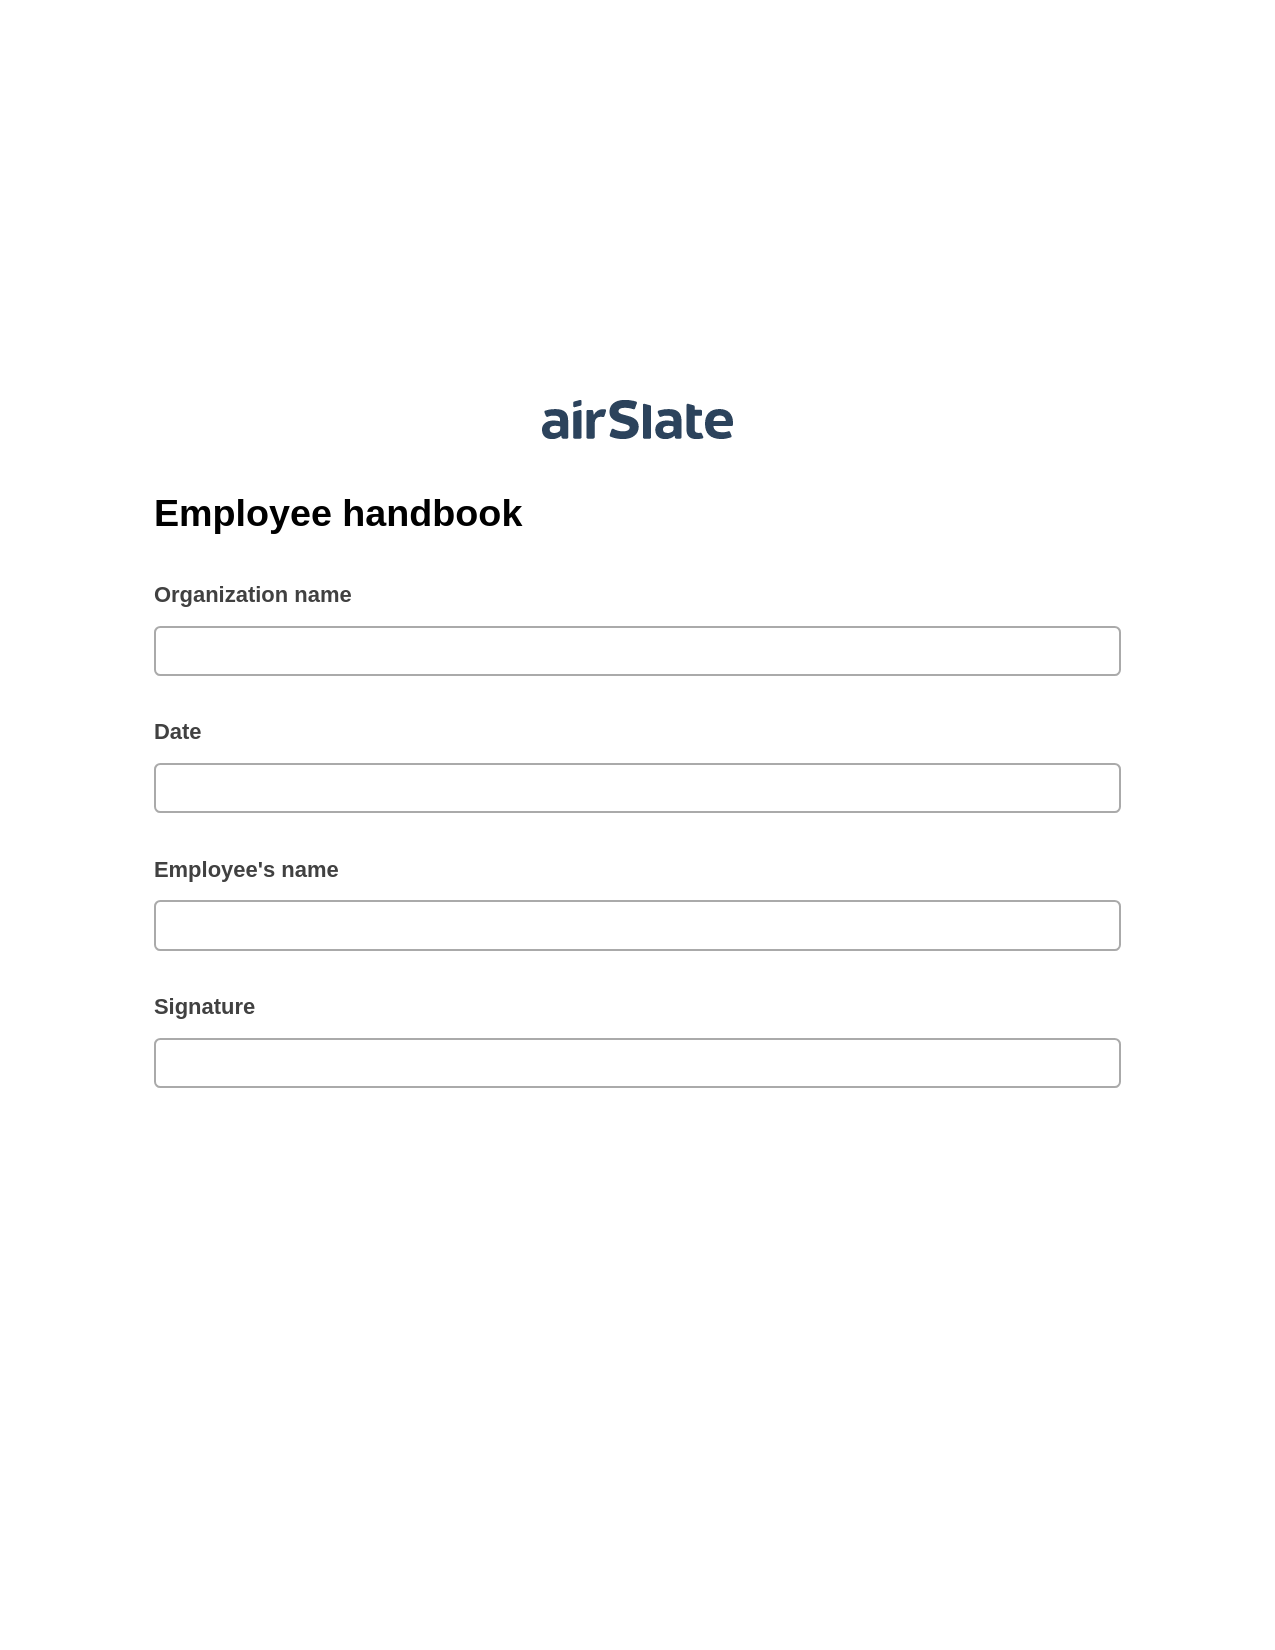 Multirole Employee handbook Pre-fill from CSV File Bot, Update Salesforce Record Bot, Google Drive Bot